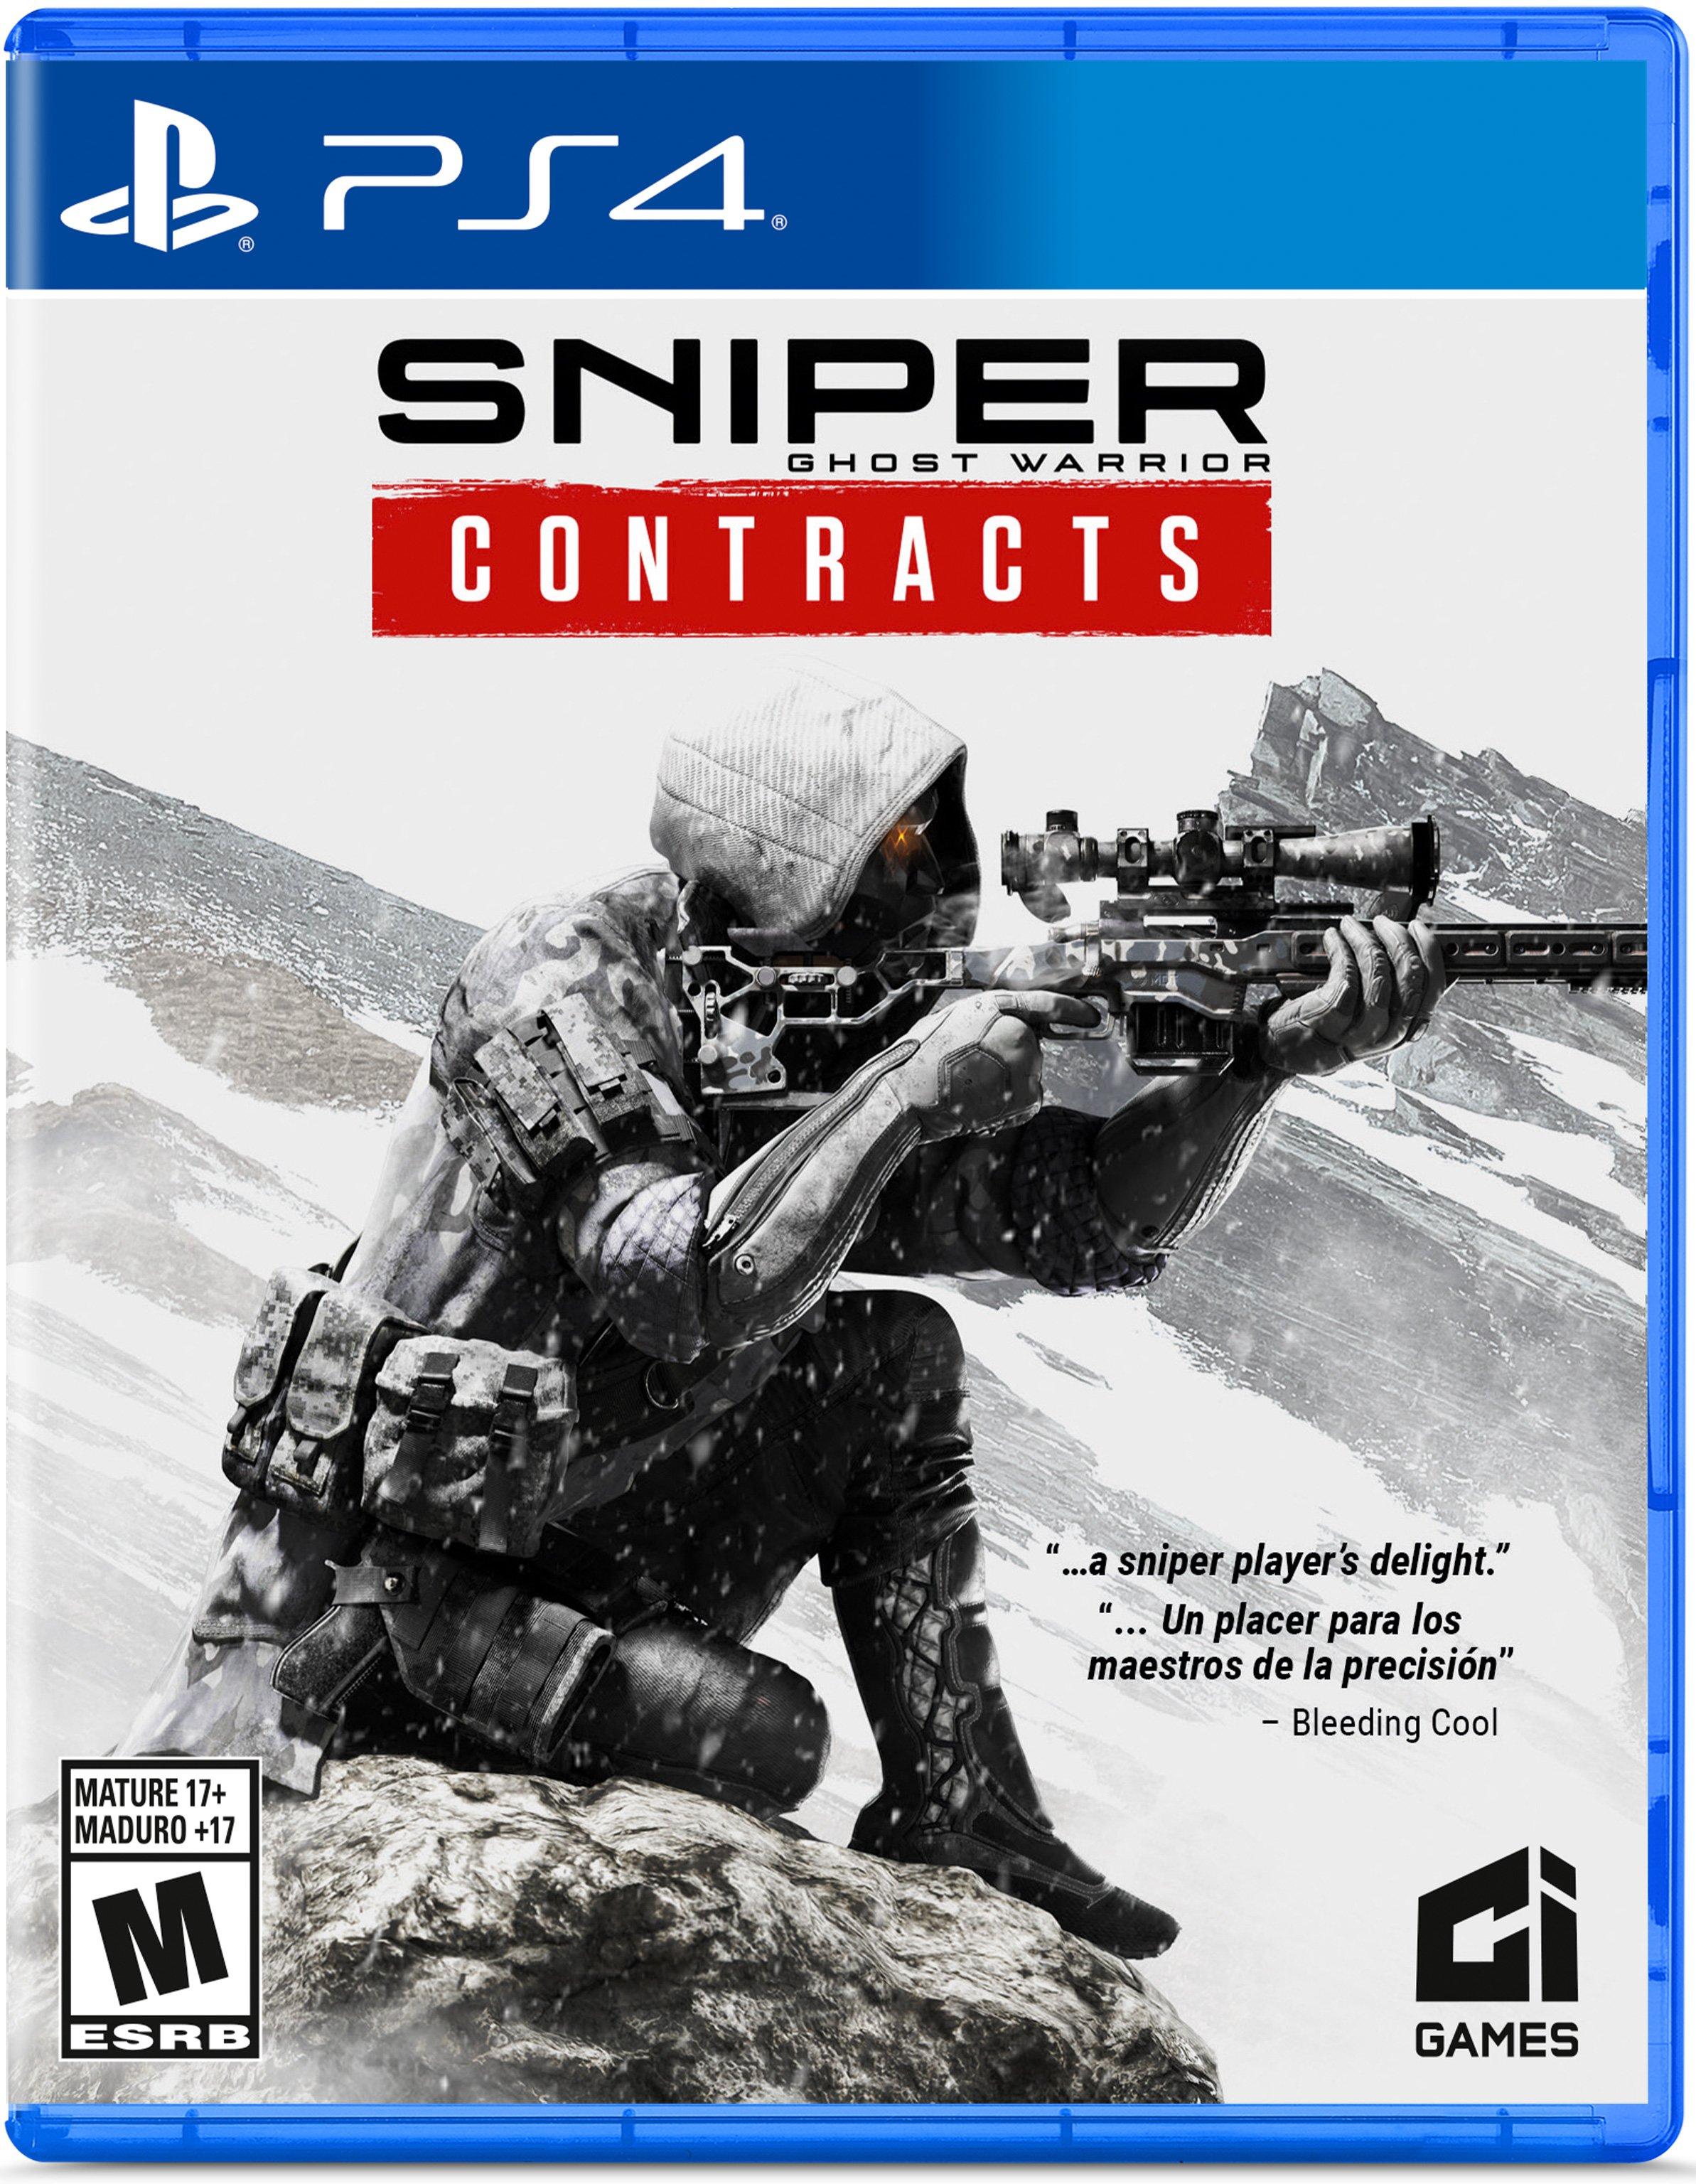 sniper ghost warrior vs contracts